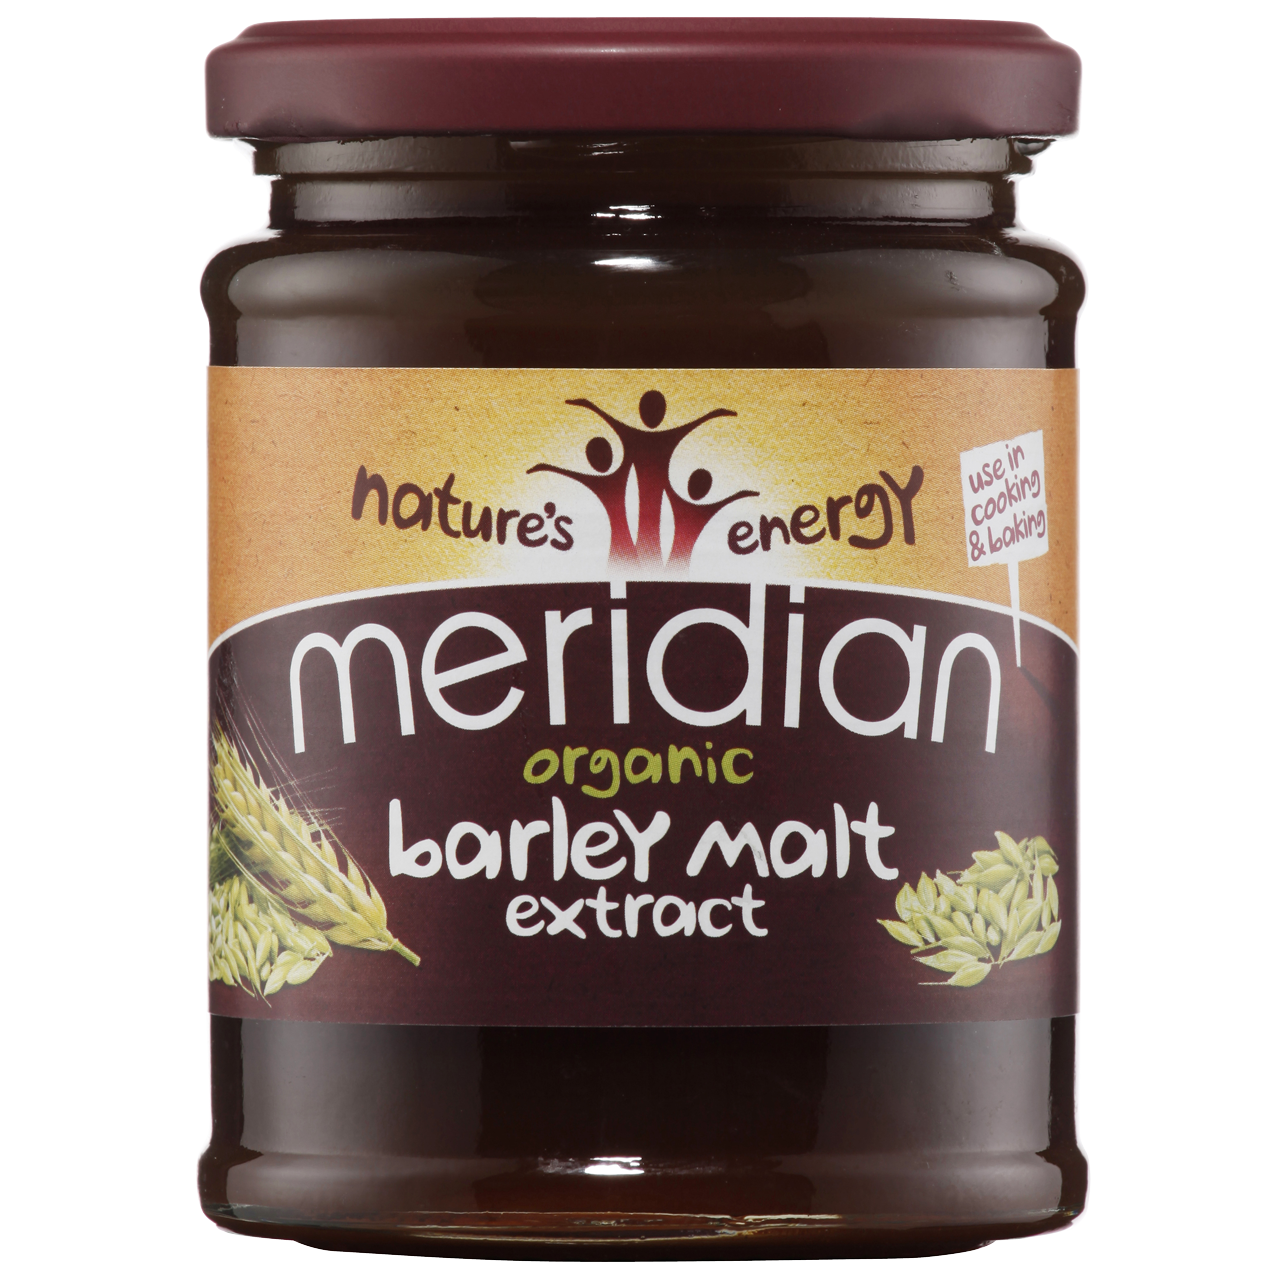 Meridian Organic Barley Malt Extract 370g - Just Natural